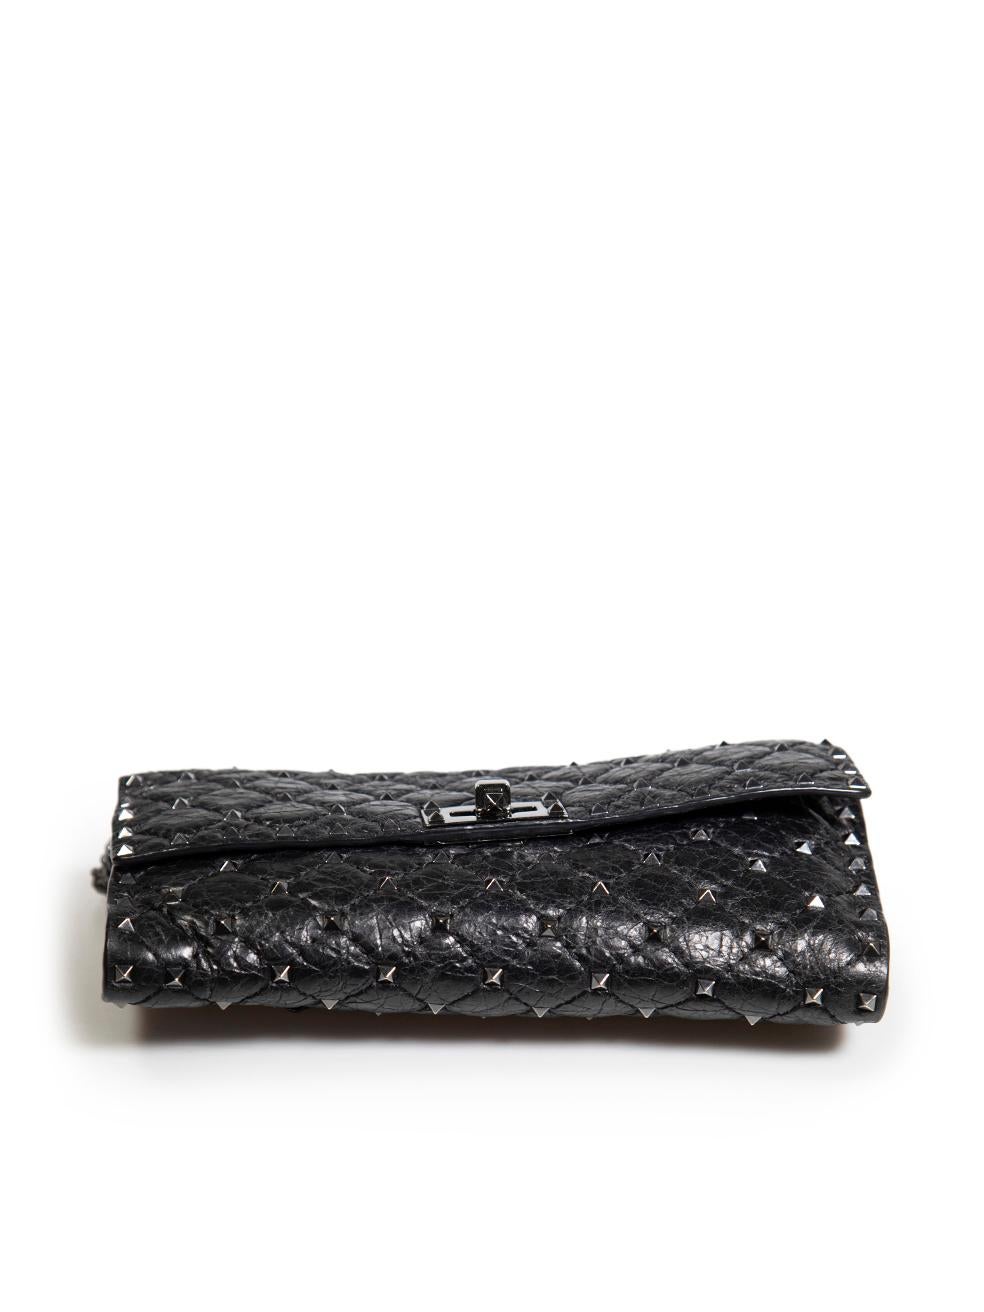 Women's Valentino Black Leather Nappa Rockstud Spike Wallet on Chain